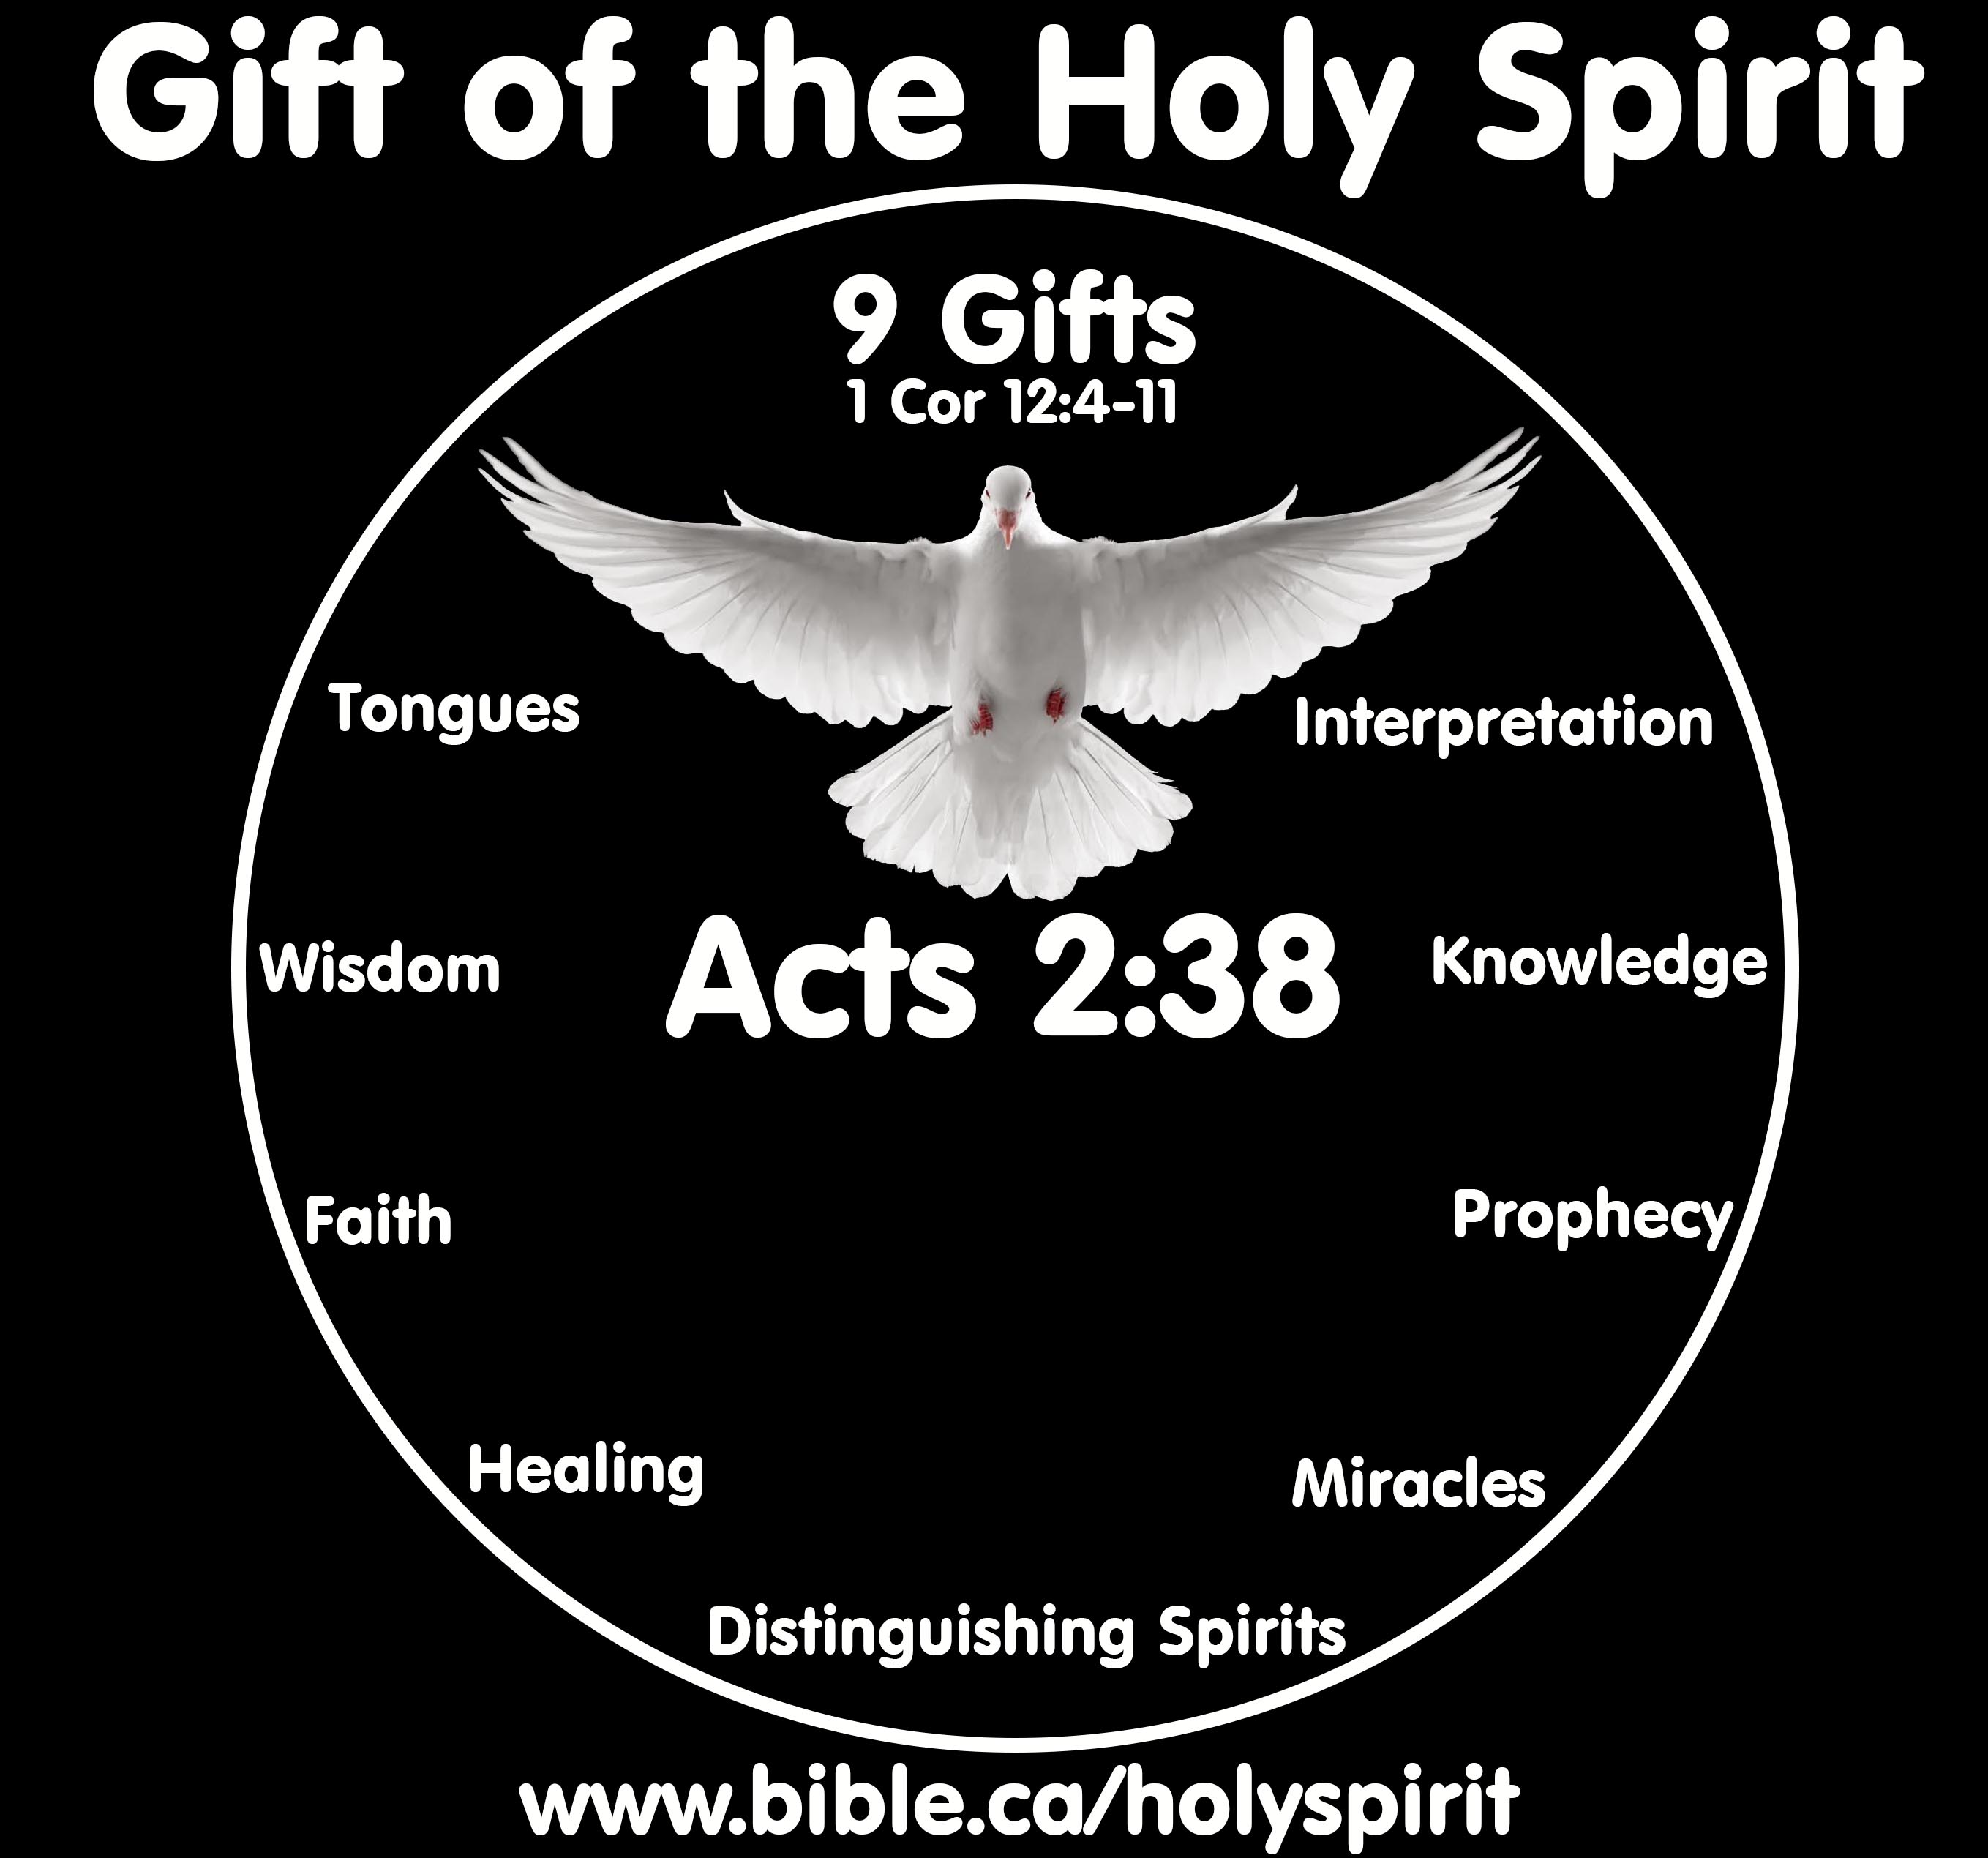 https://www.bible.ca/holyspirit/gift-of-the-Holy-Spirit-9-spiritual-gifts-supernatural-interpretation-tongues-miracles-healing-faith-knowledge-wisdom-prophecy-distinguishing-spirits.jpg